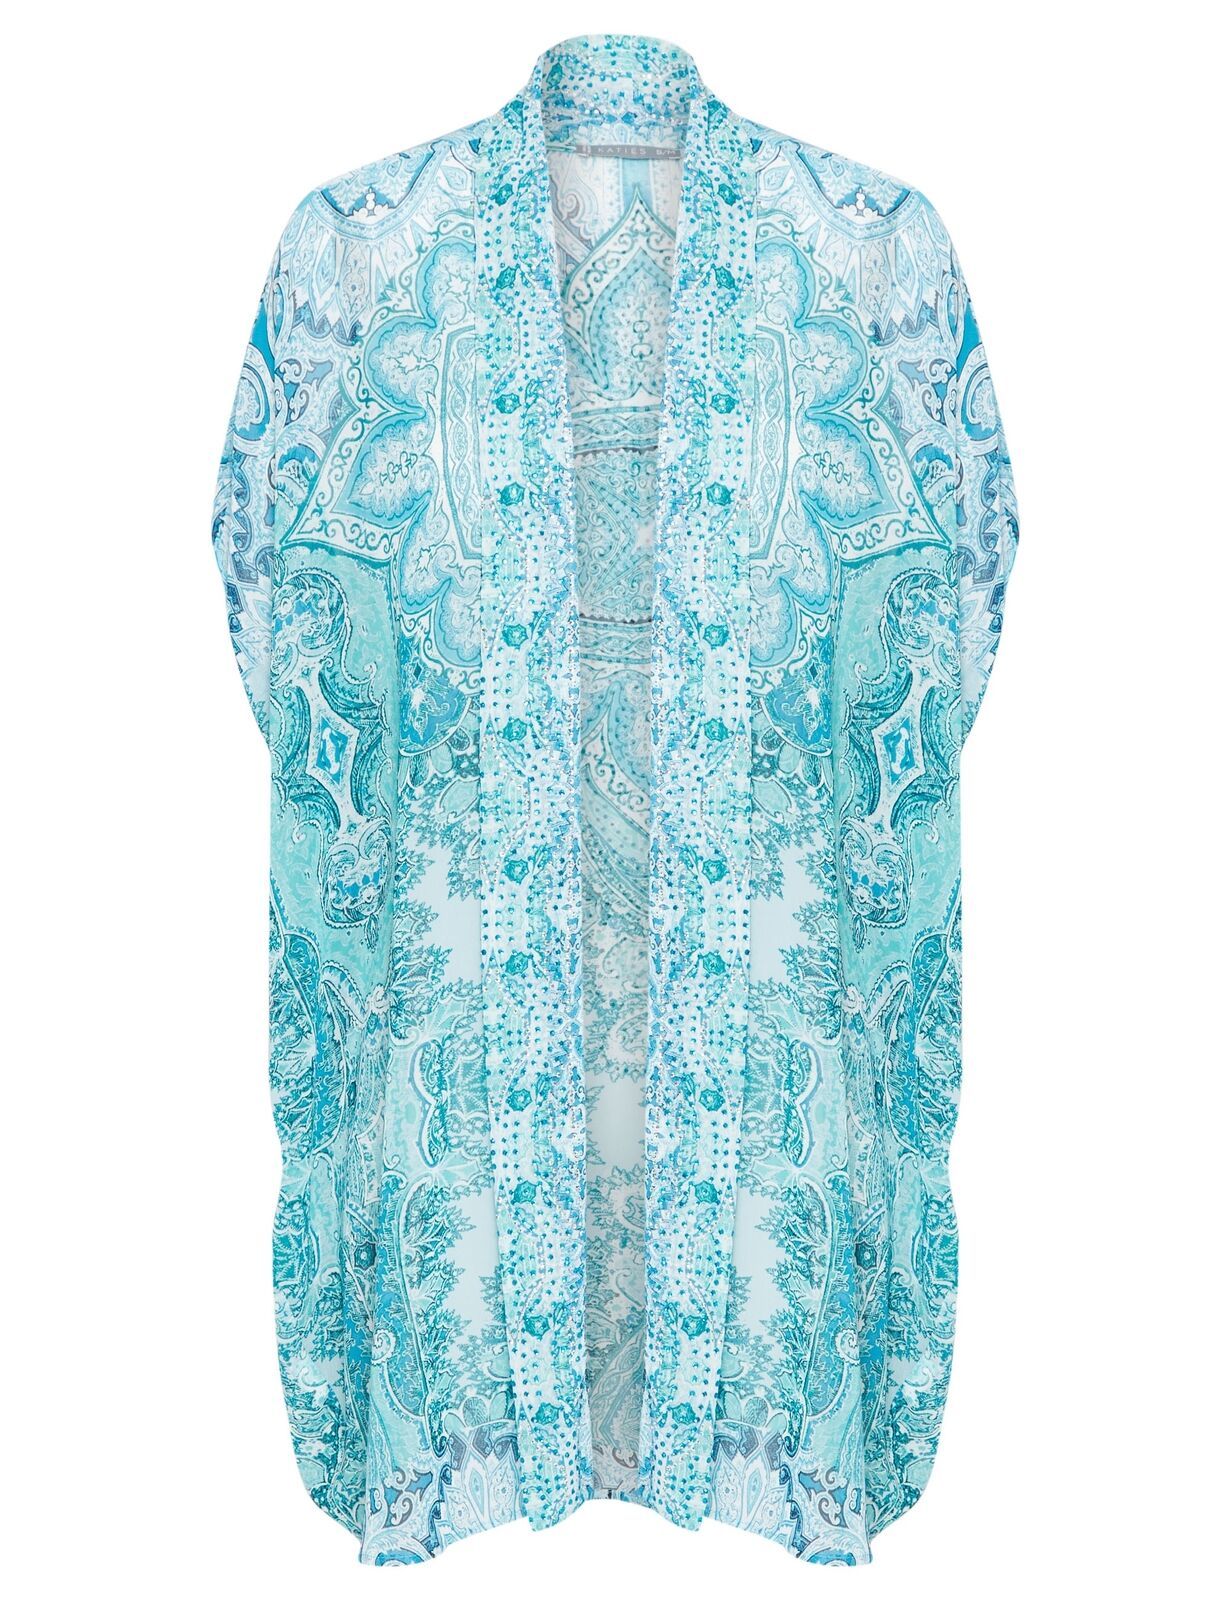 KATIES - Womens Tops - Blue - Print - Kimono Top - Blouse - Women's Clothing | eBay AU